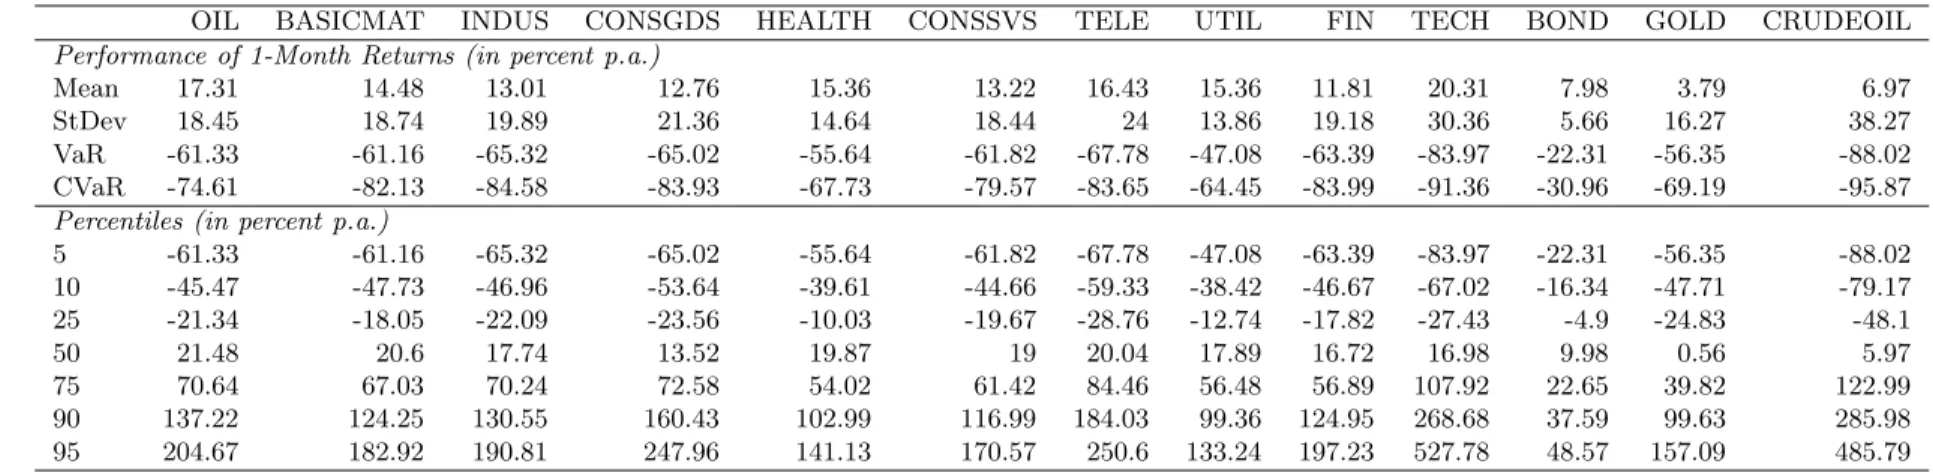 Table 1: Summary statistics for European data (January 1982 - December 2008)